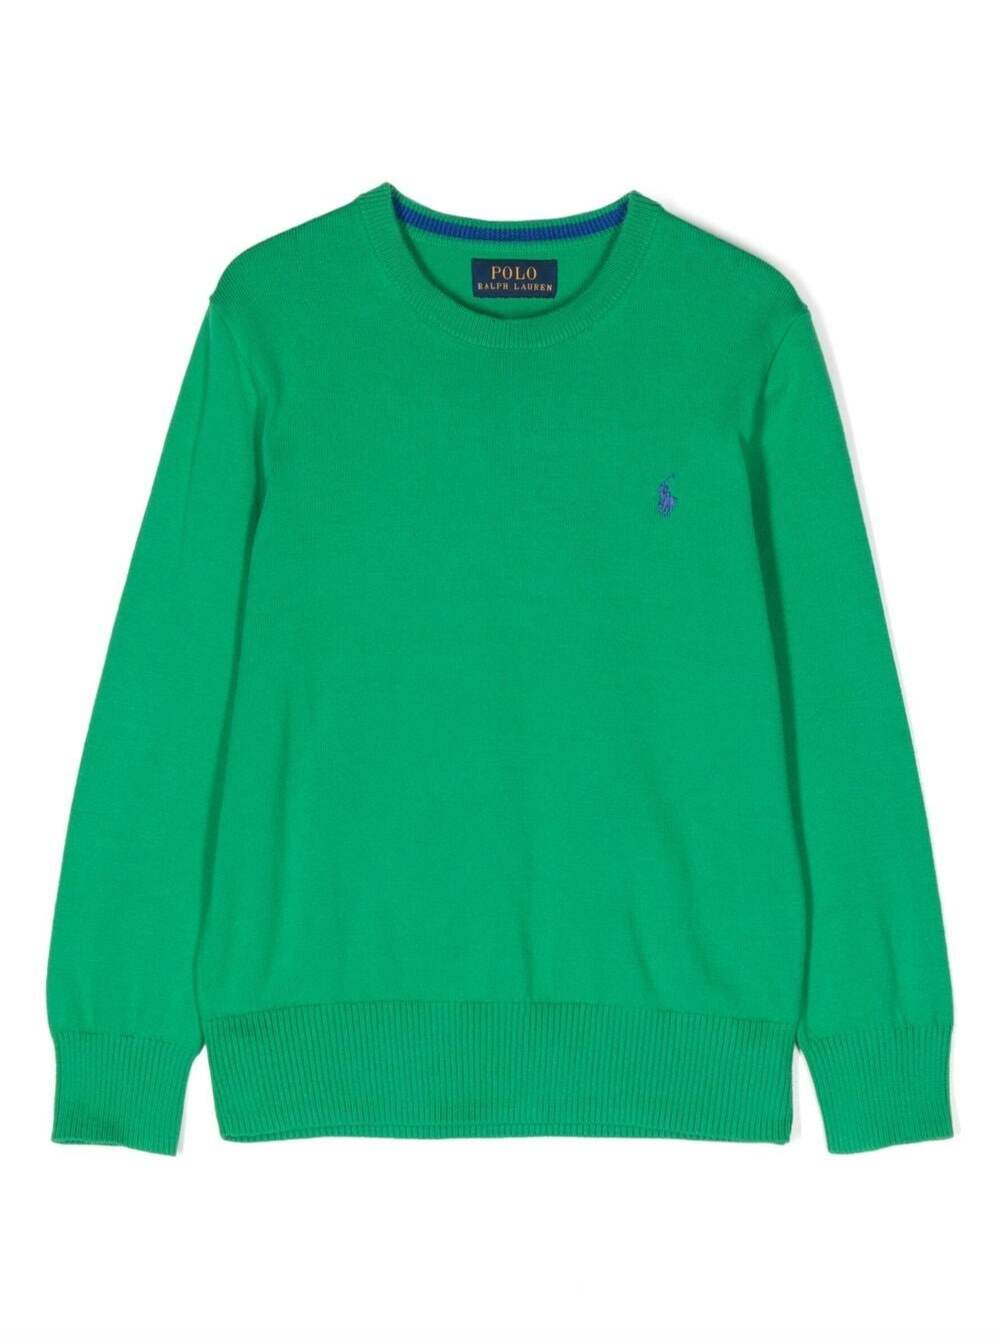 Polo Ralph Lauren Kids' Sweater In Green